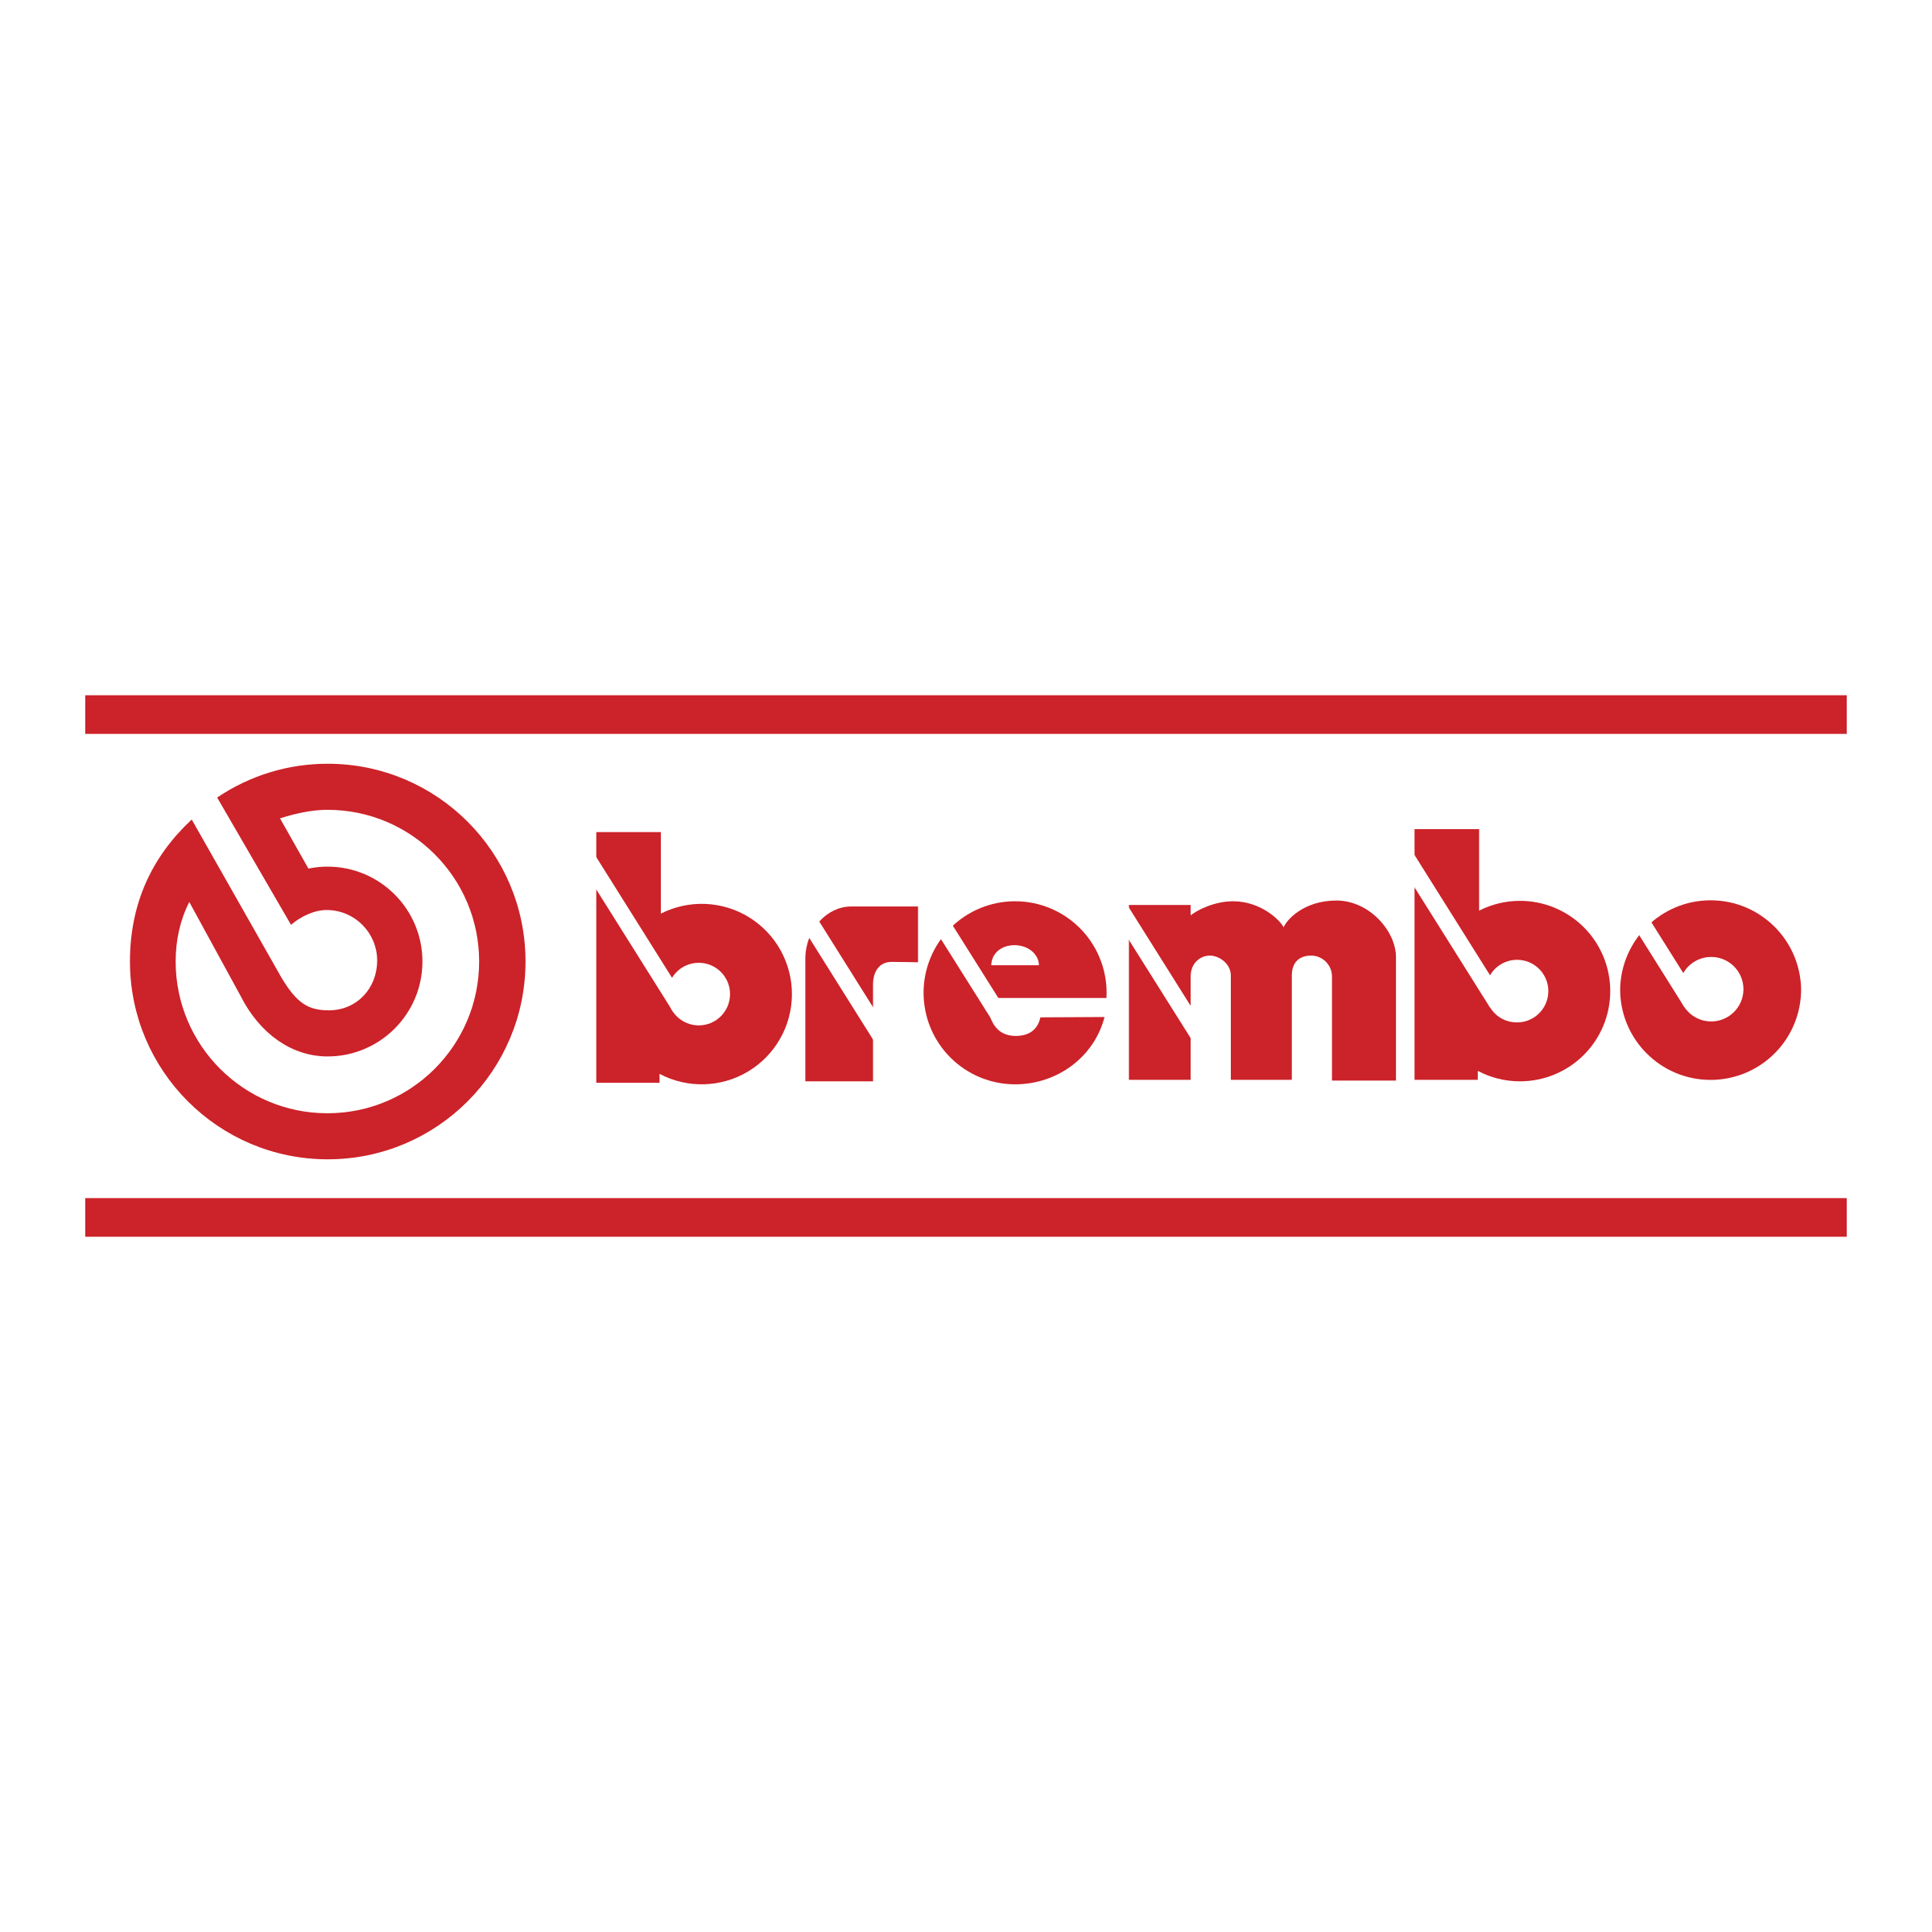 Brembo Logo - Brembo Logo PNG Transparent & SVG Vector